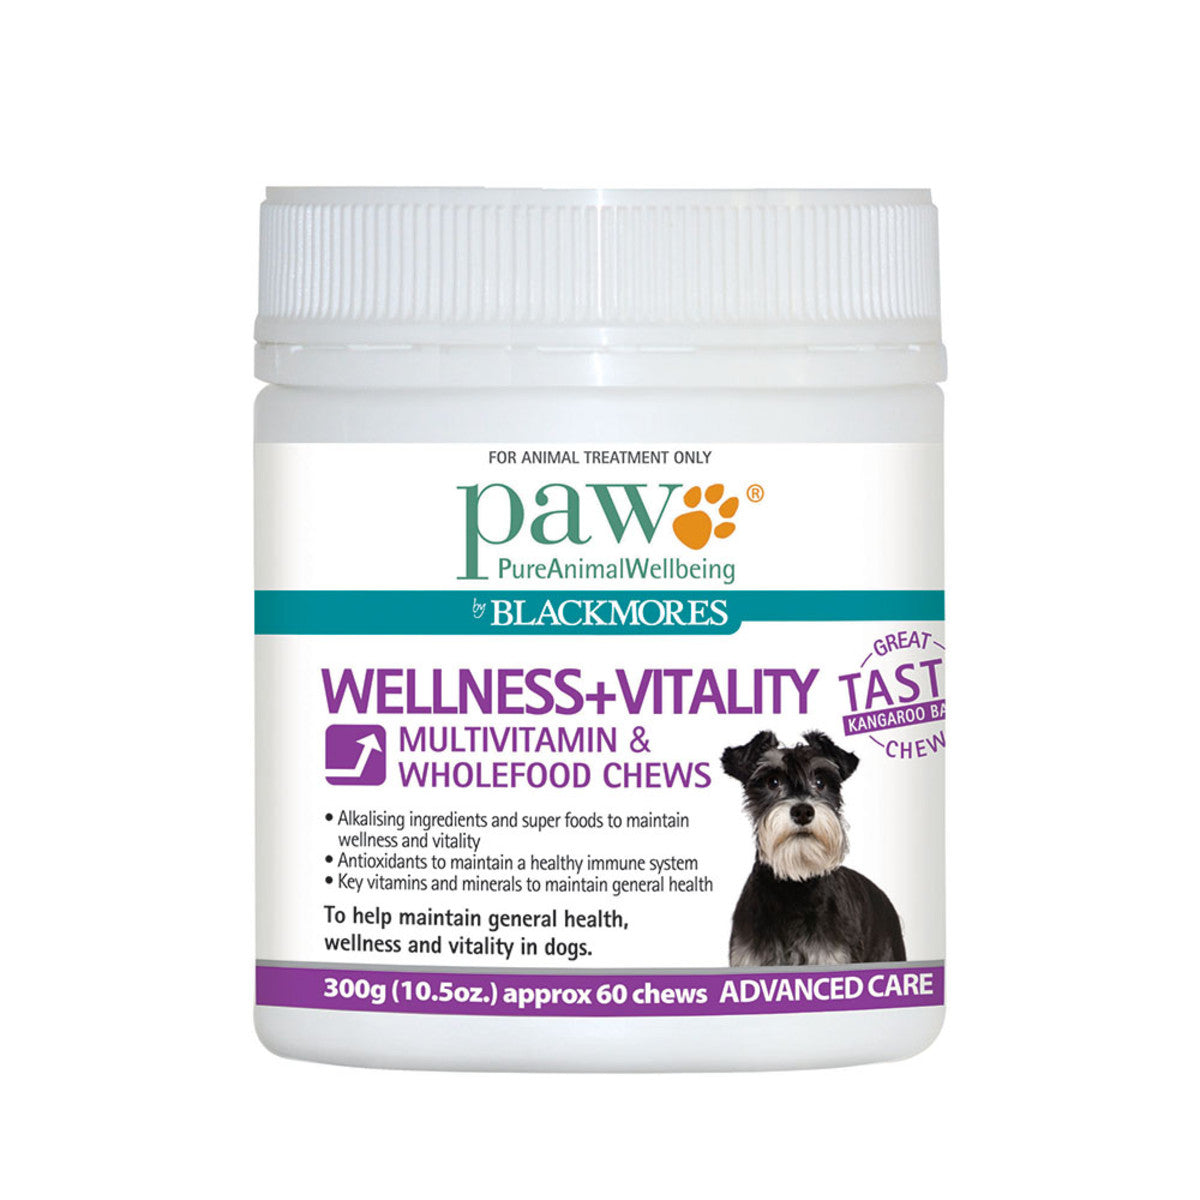 PAW Wellness Plus Vitality Multivit Wholefood Chews 300g